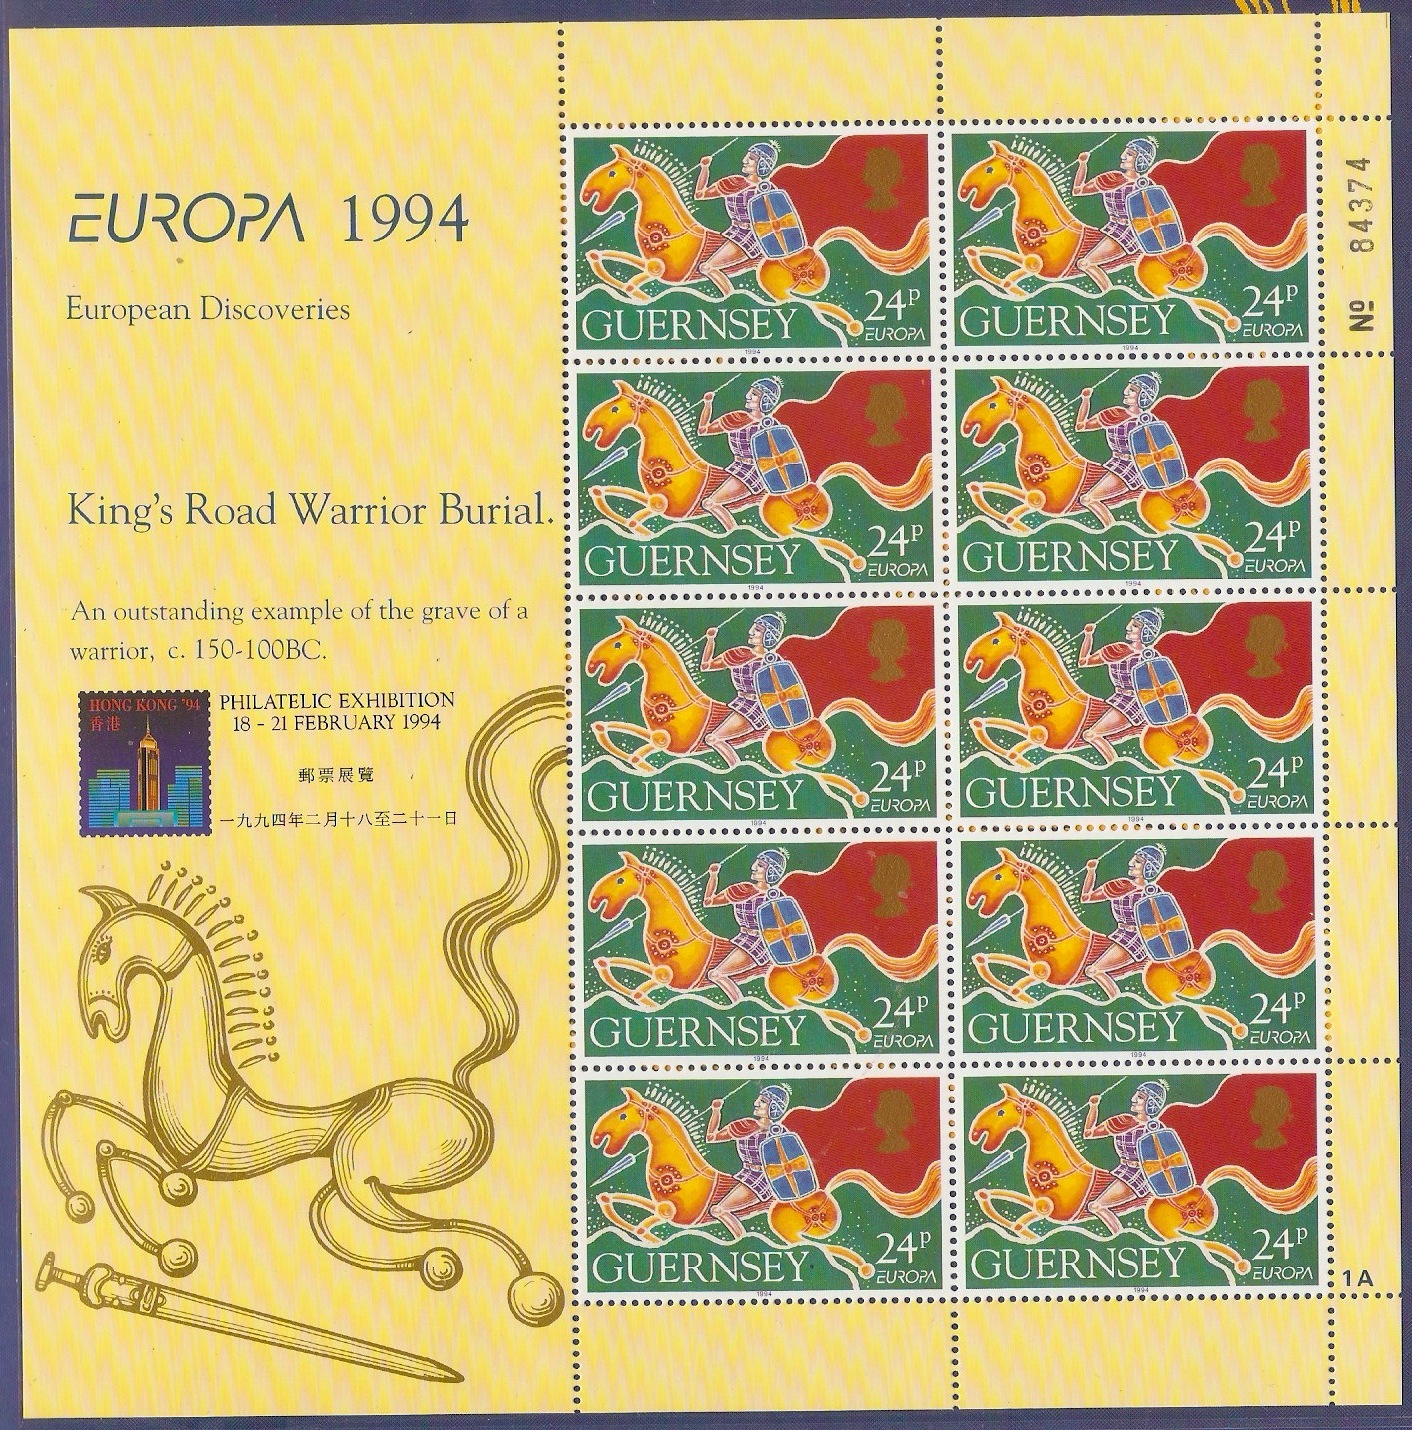 Guernsey 1994 24p Europa Stamp Series. SG635.